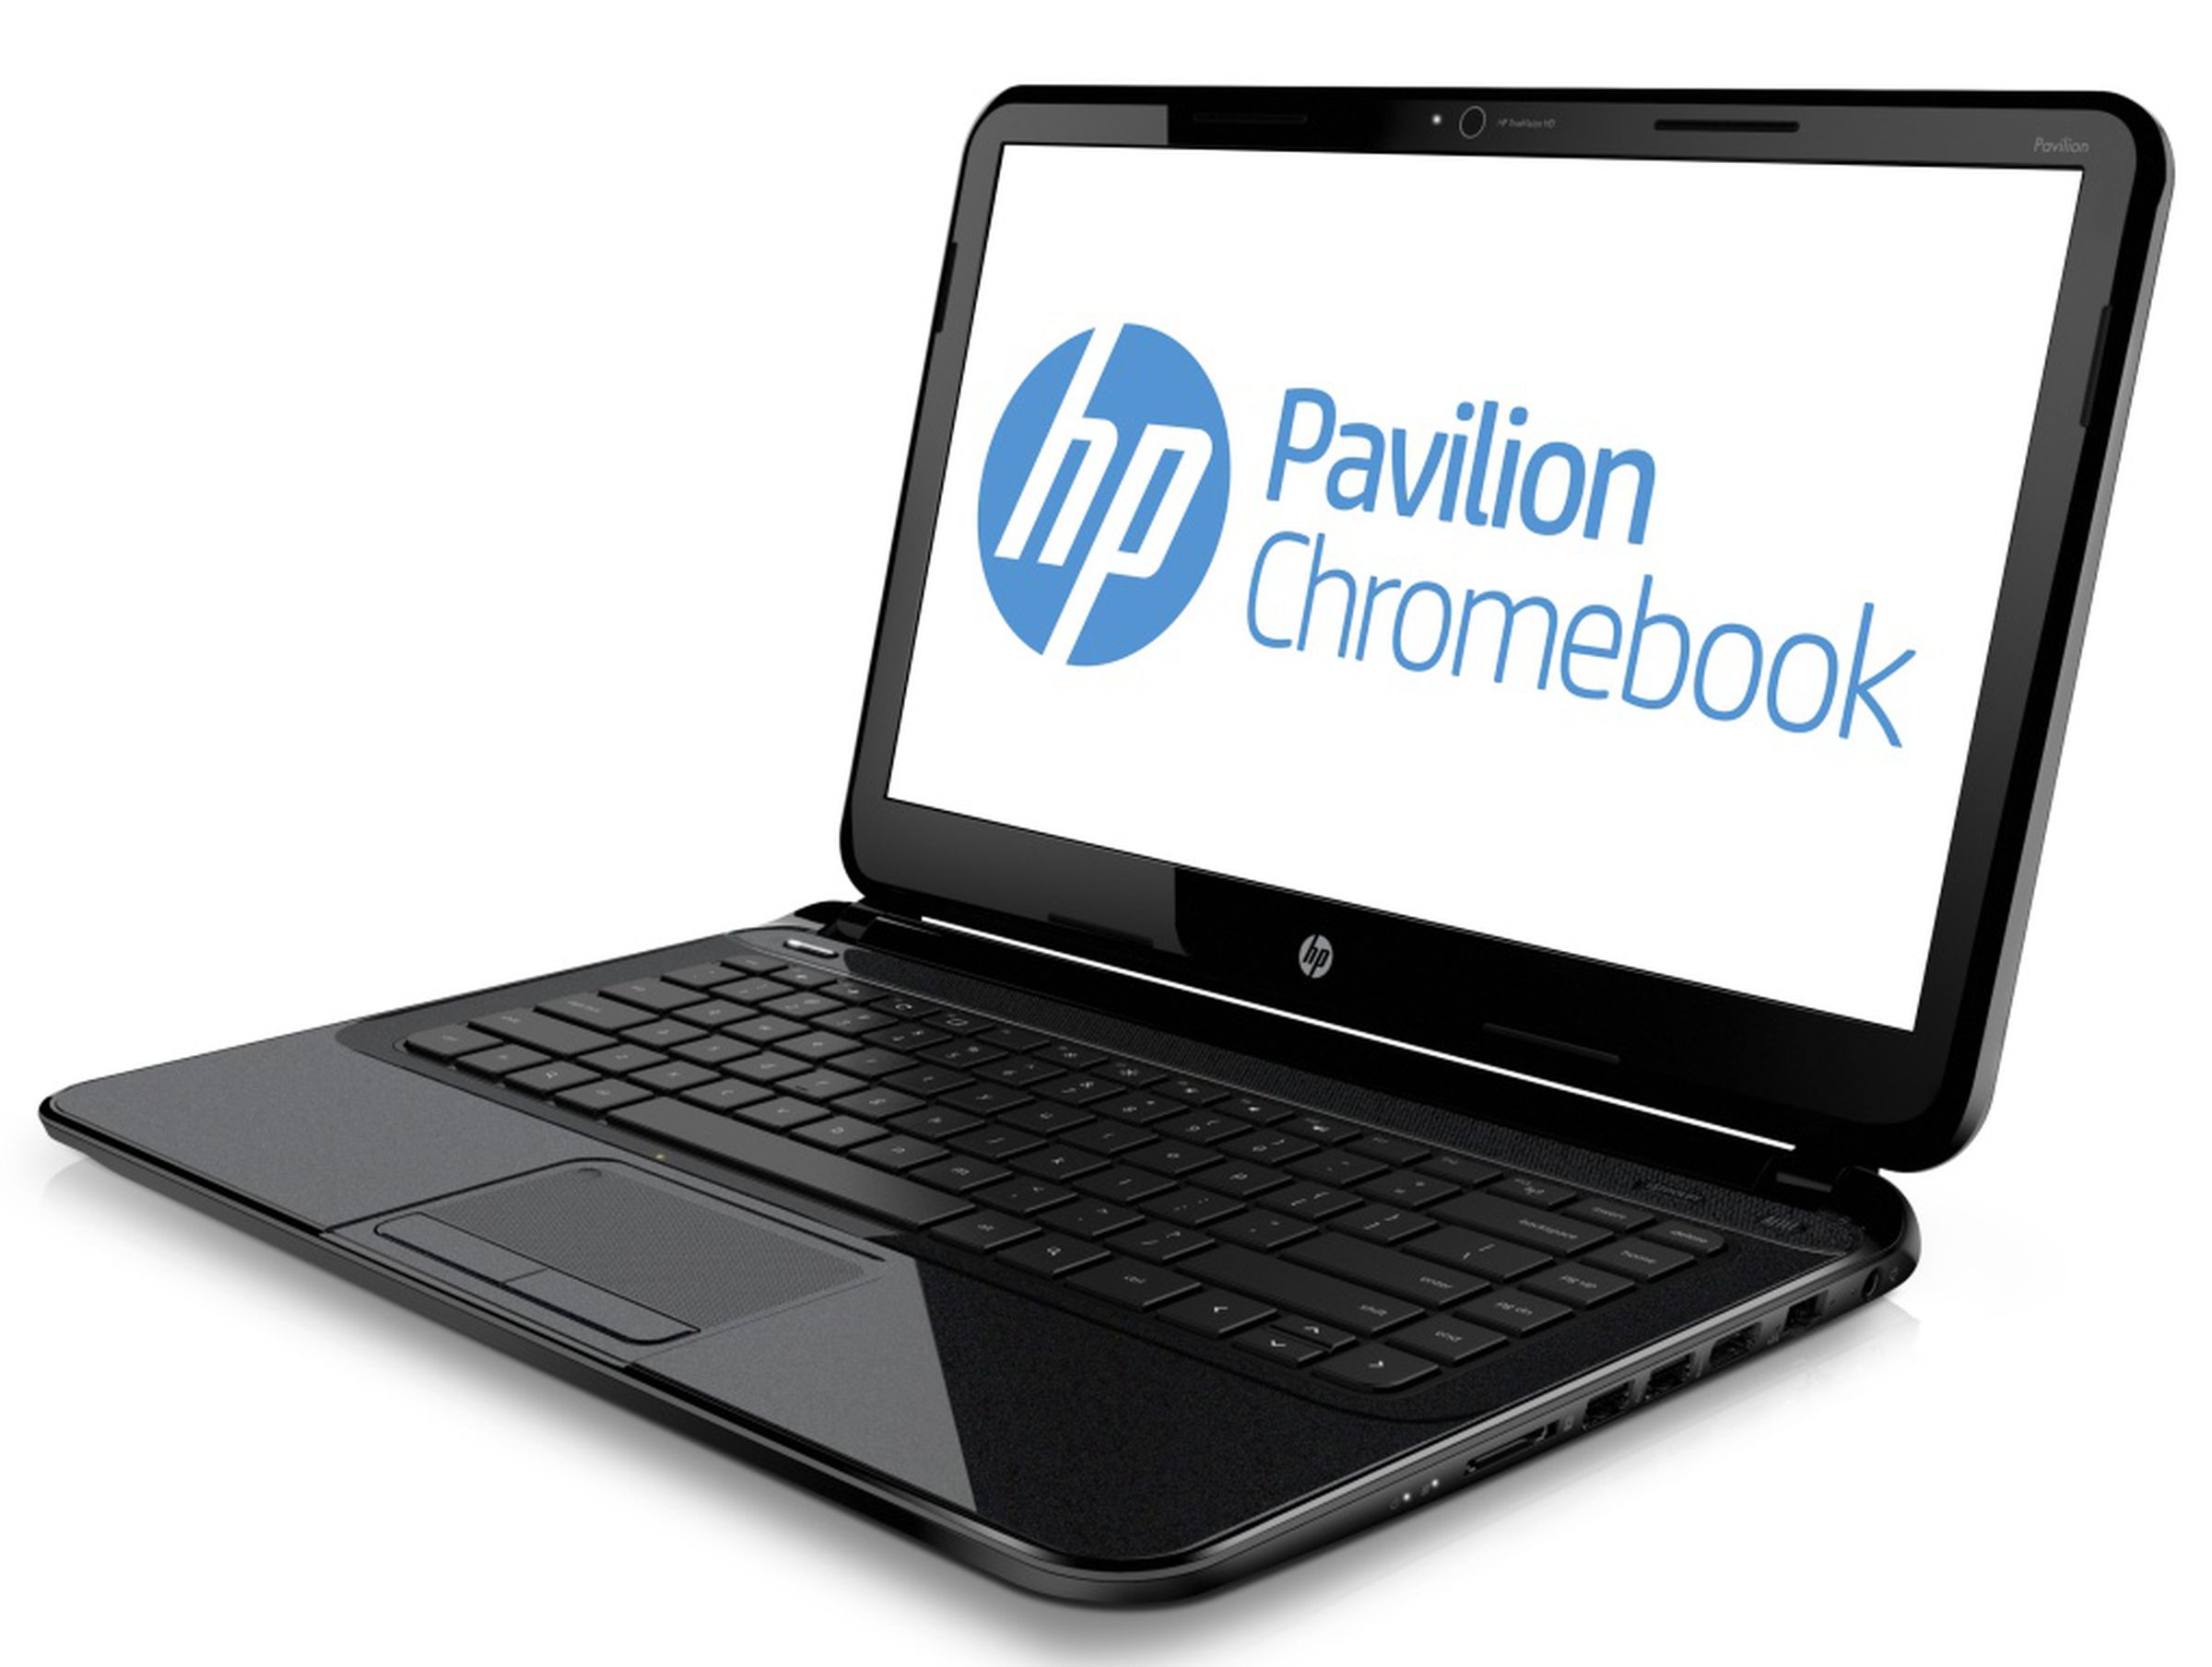 HP Pavilion 14 Chromebook press pictures